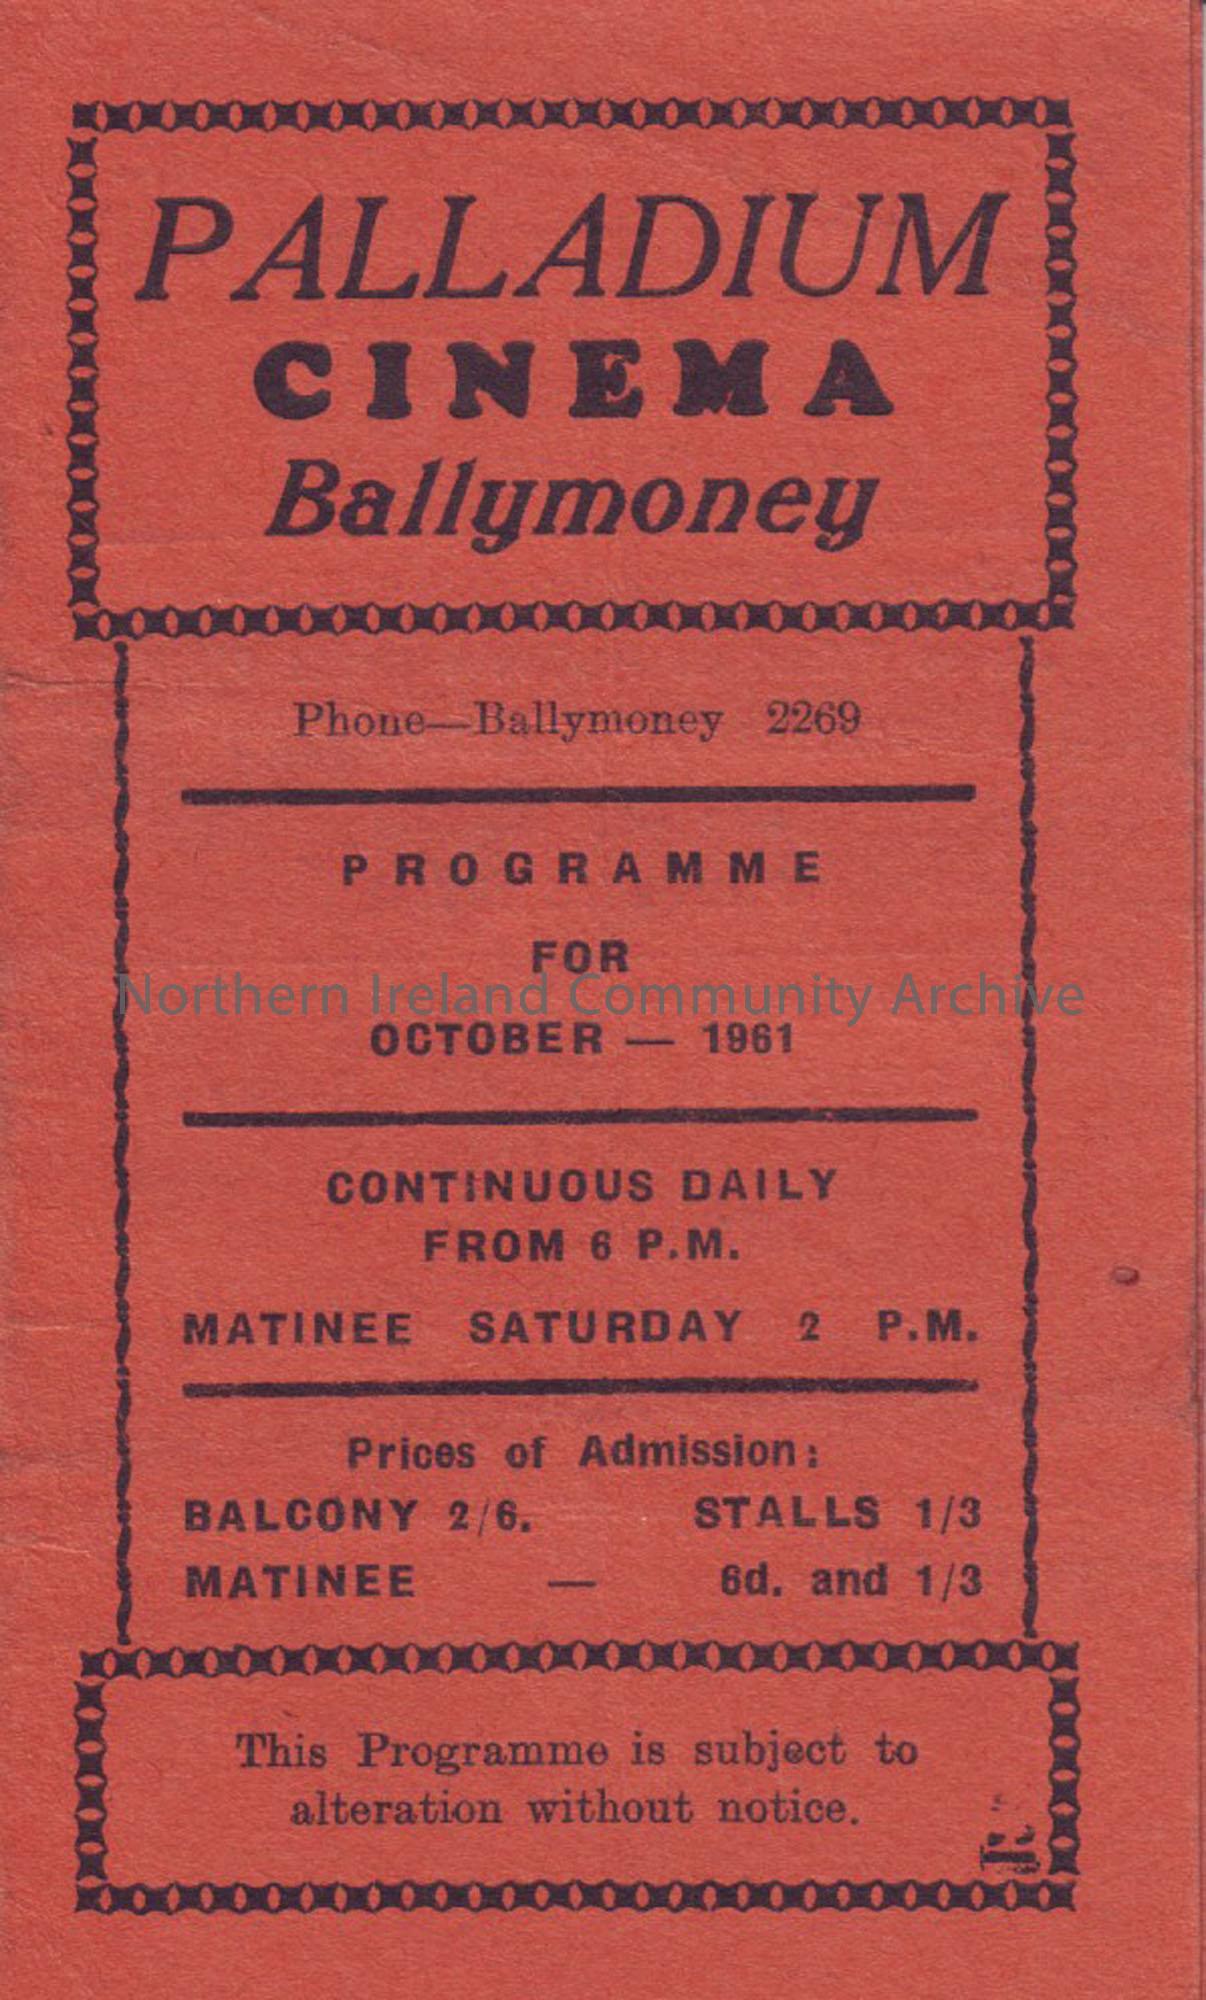 orange monthly programme for Ballymoney Palladium cinema- October 1961